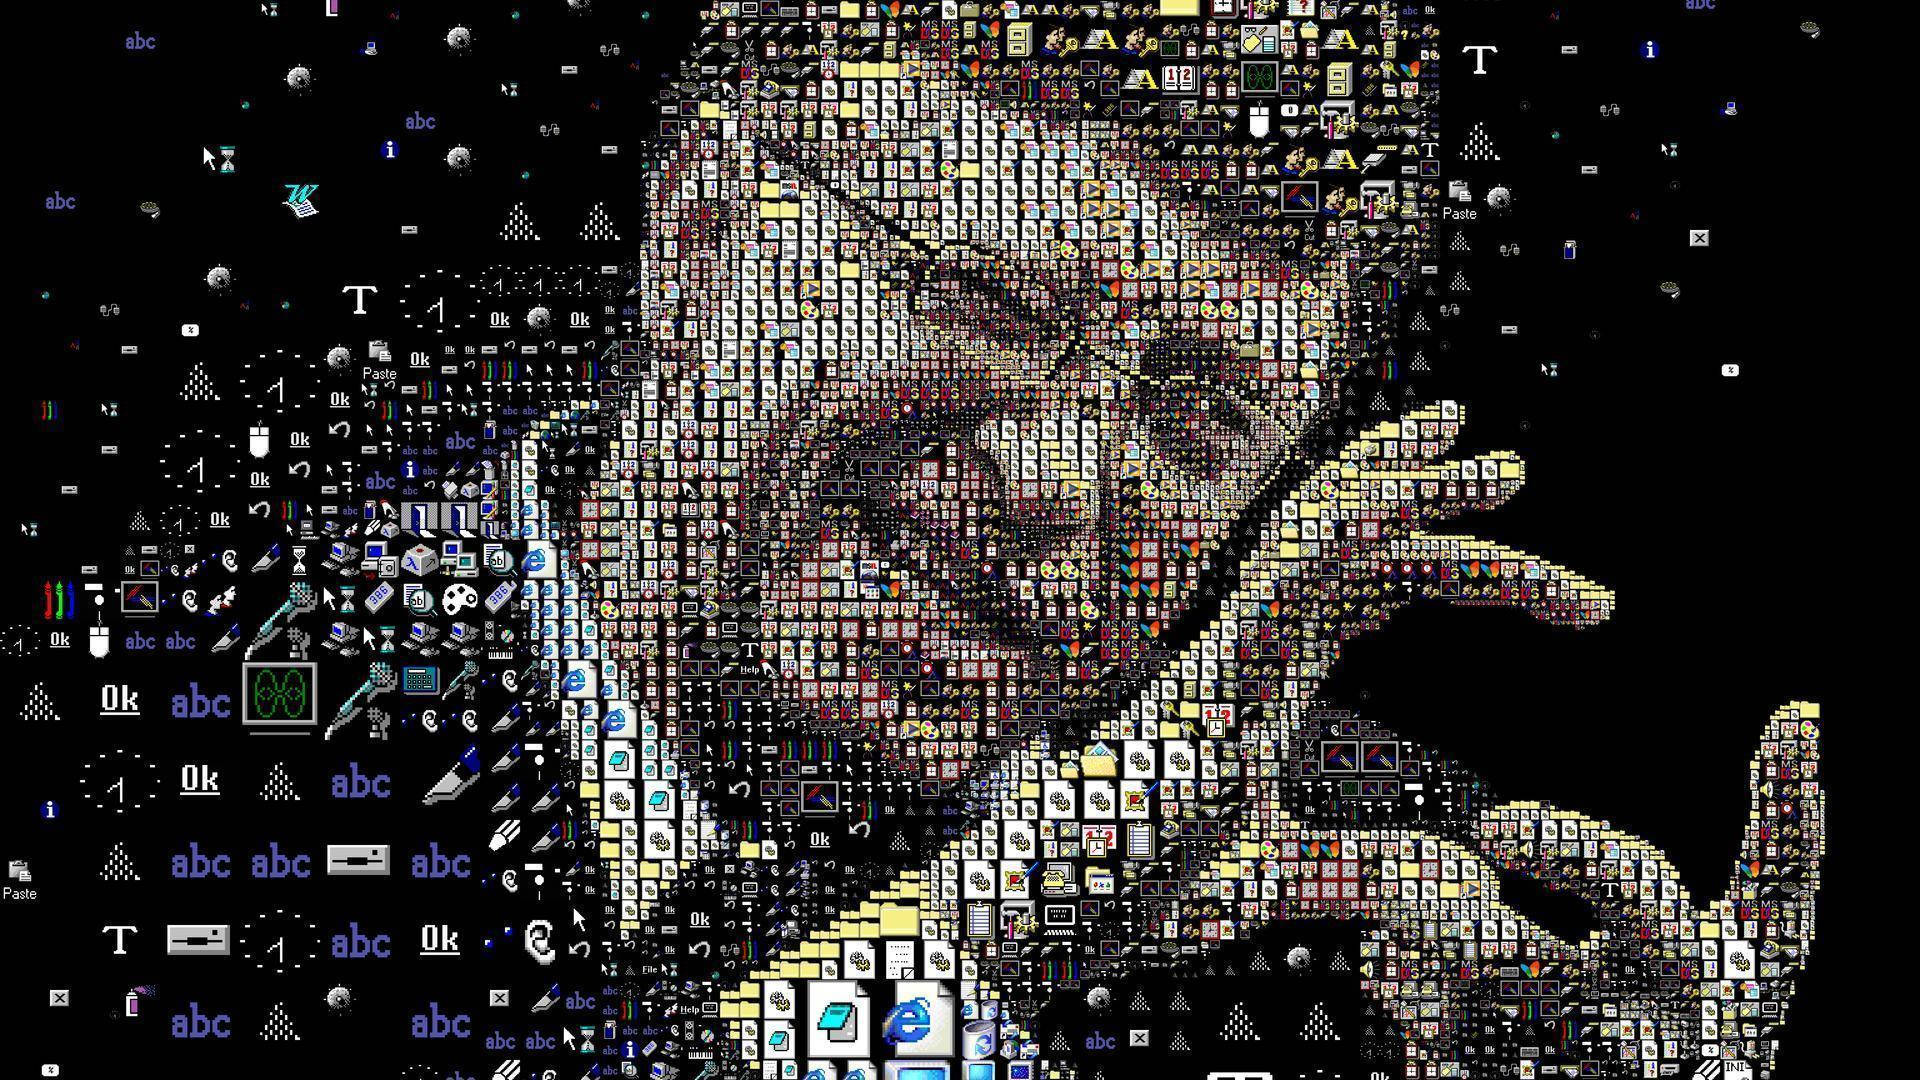 Pixelated Bill Gates